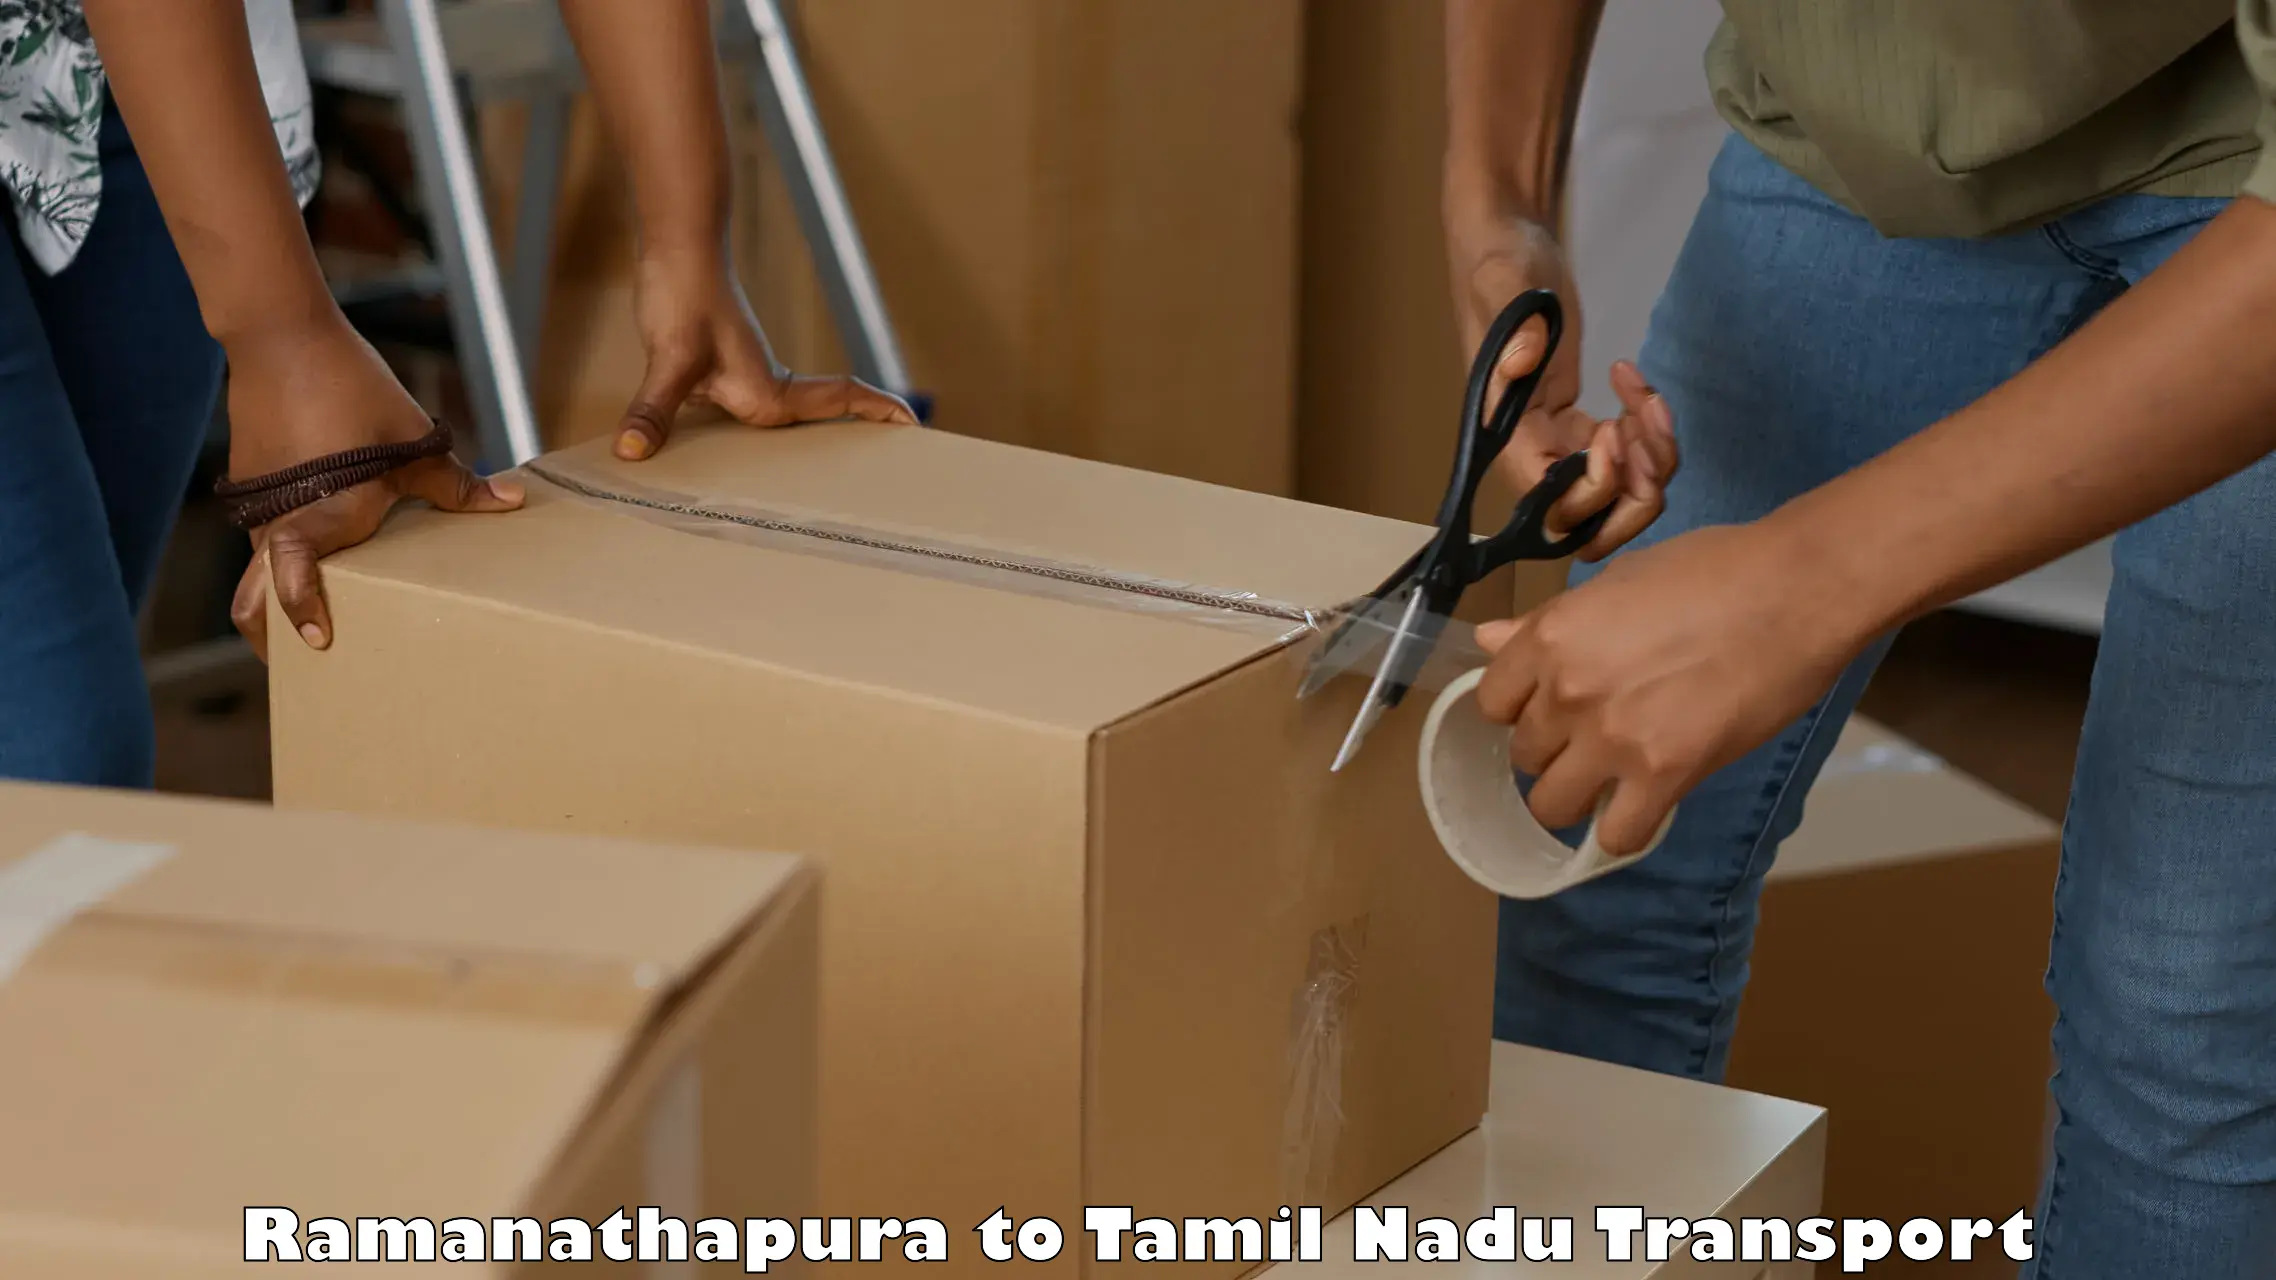 Shipping partner Ramanathapura to Tiruvallur